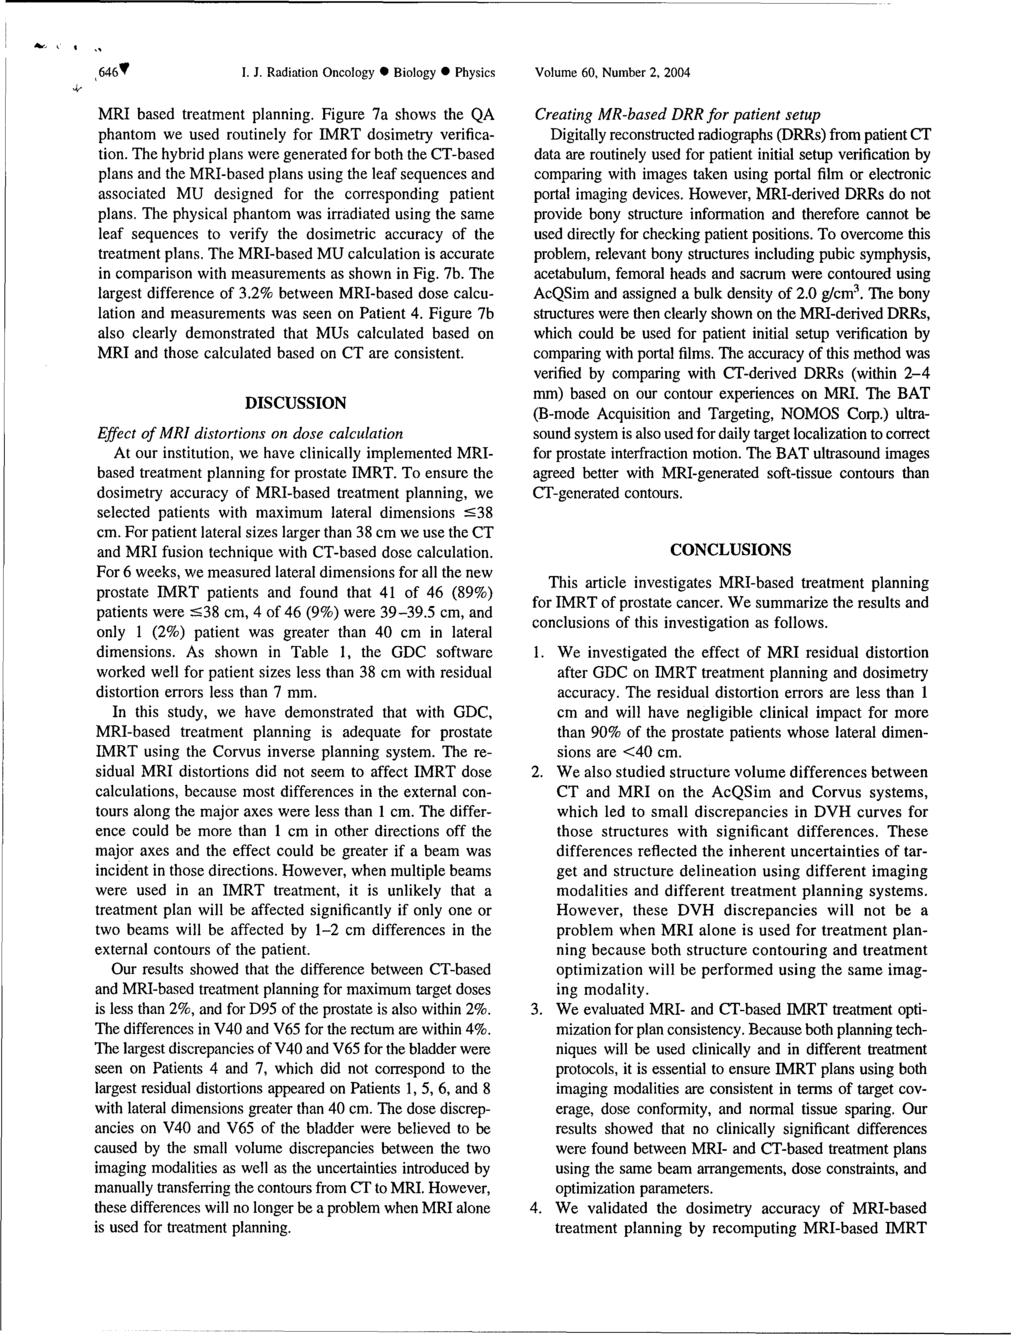 ., 646T I. J. Radiation Oncology 0 Biology 0 Physics Volume 60, Number 2, 2004 MRI based treatment planning.